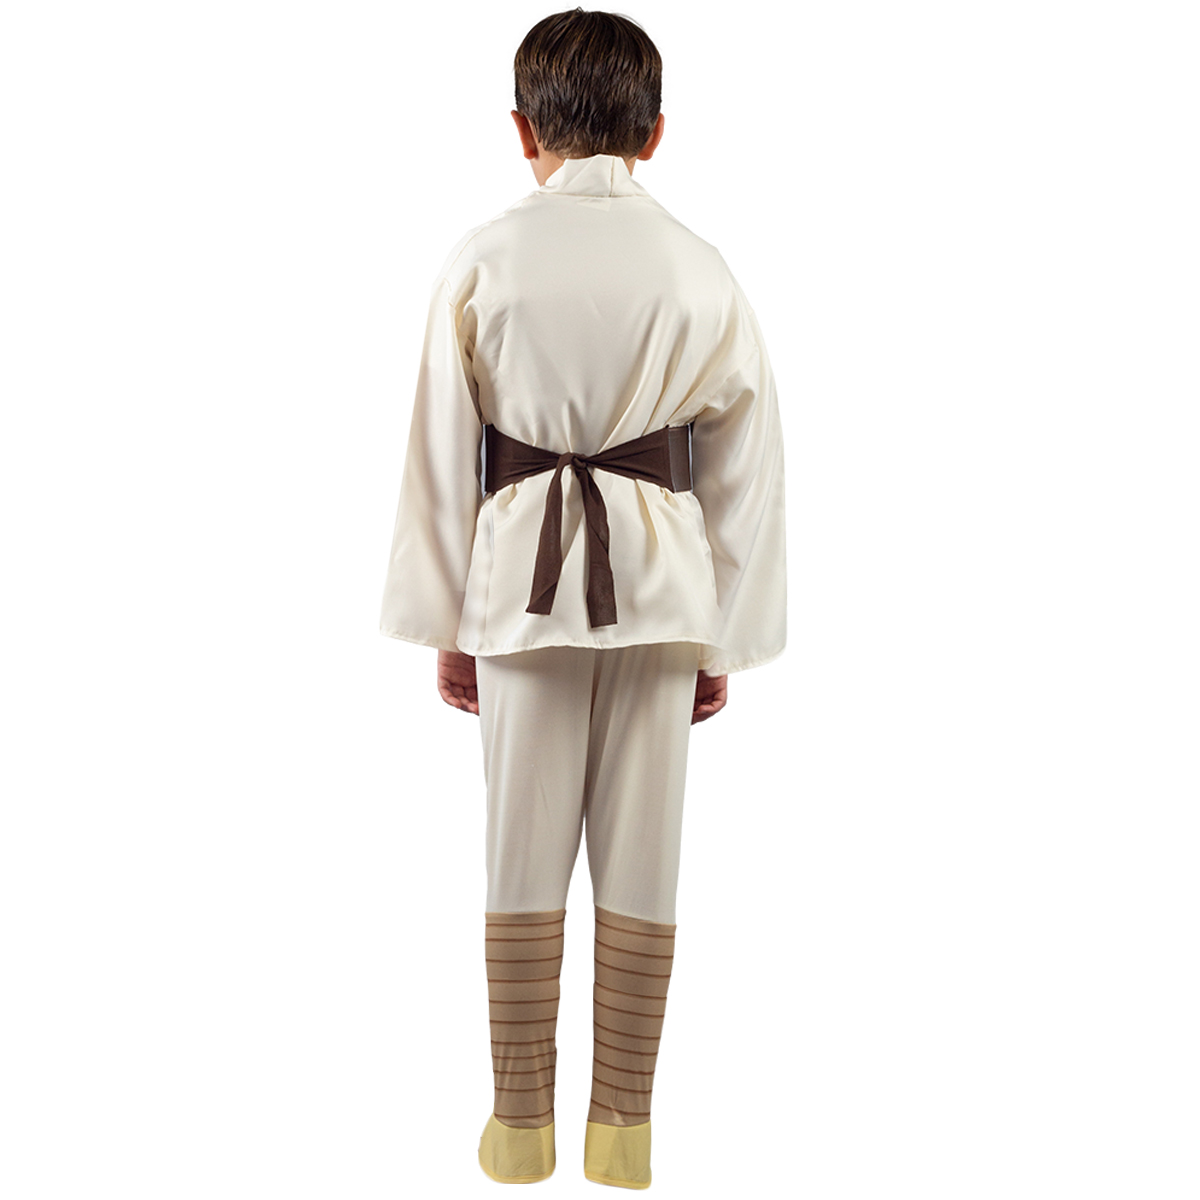 Rubie's Deluxe Luke Skywalker Halloween Fancy-Dress Costume for Child, Little Boys S - image 3 of 6